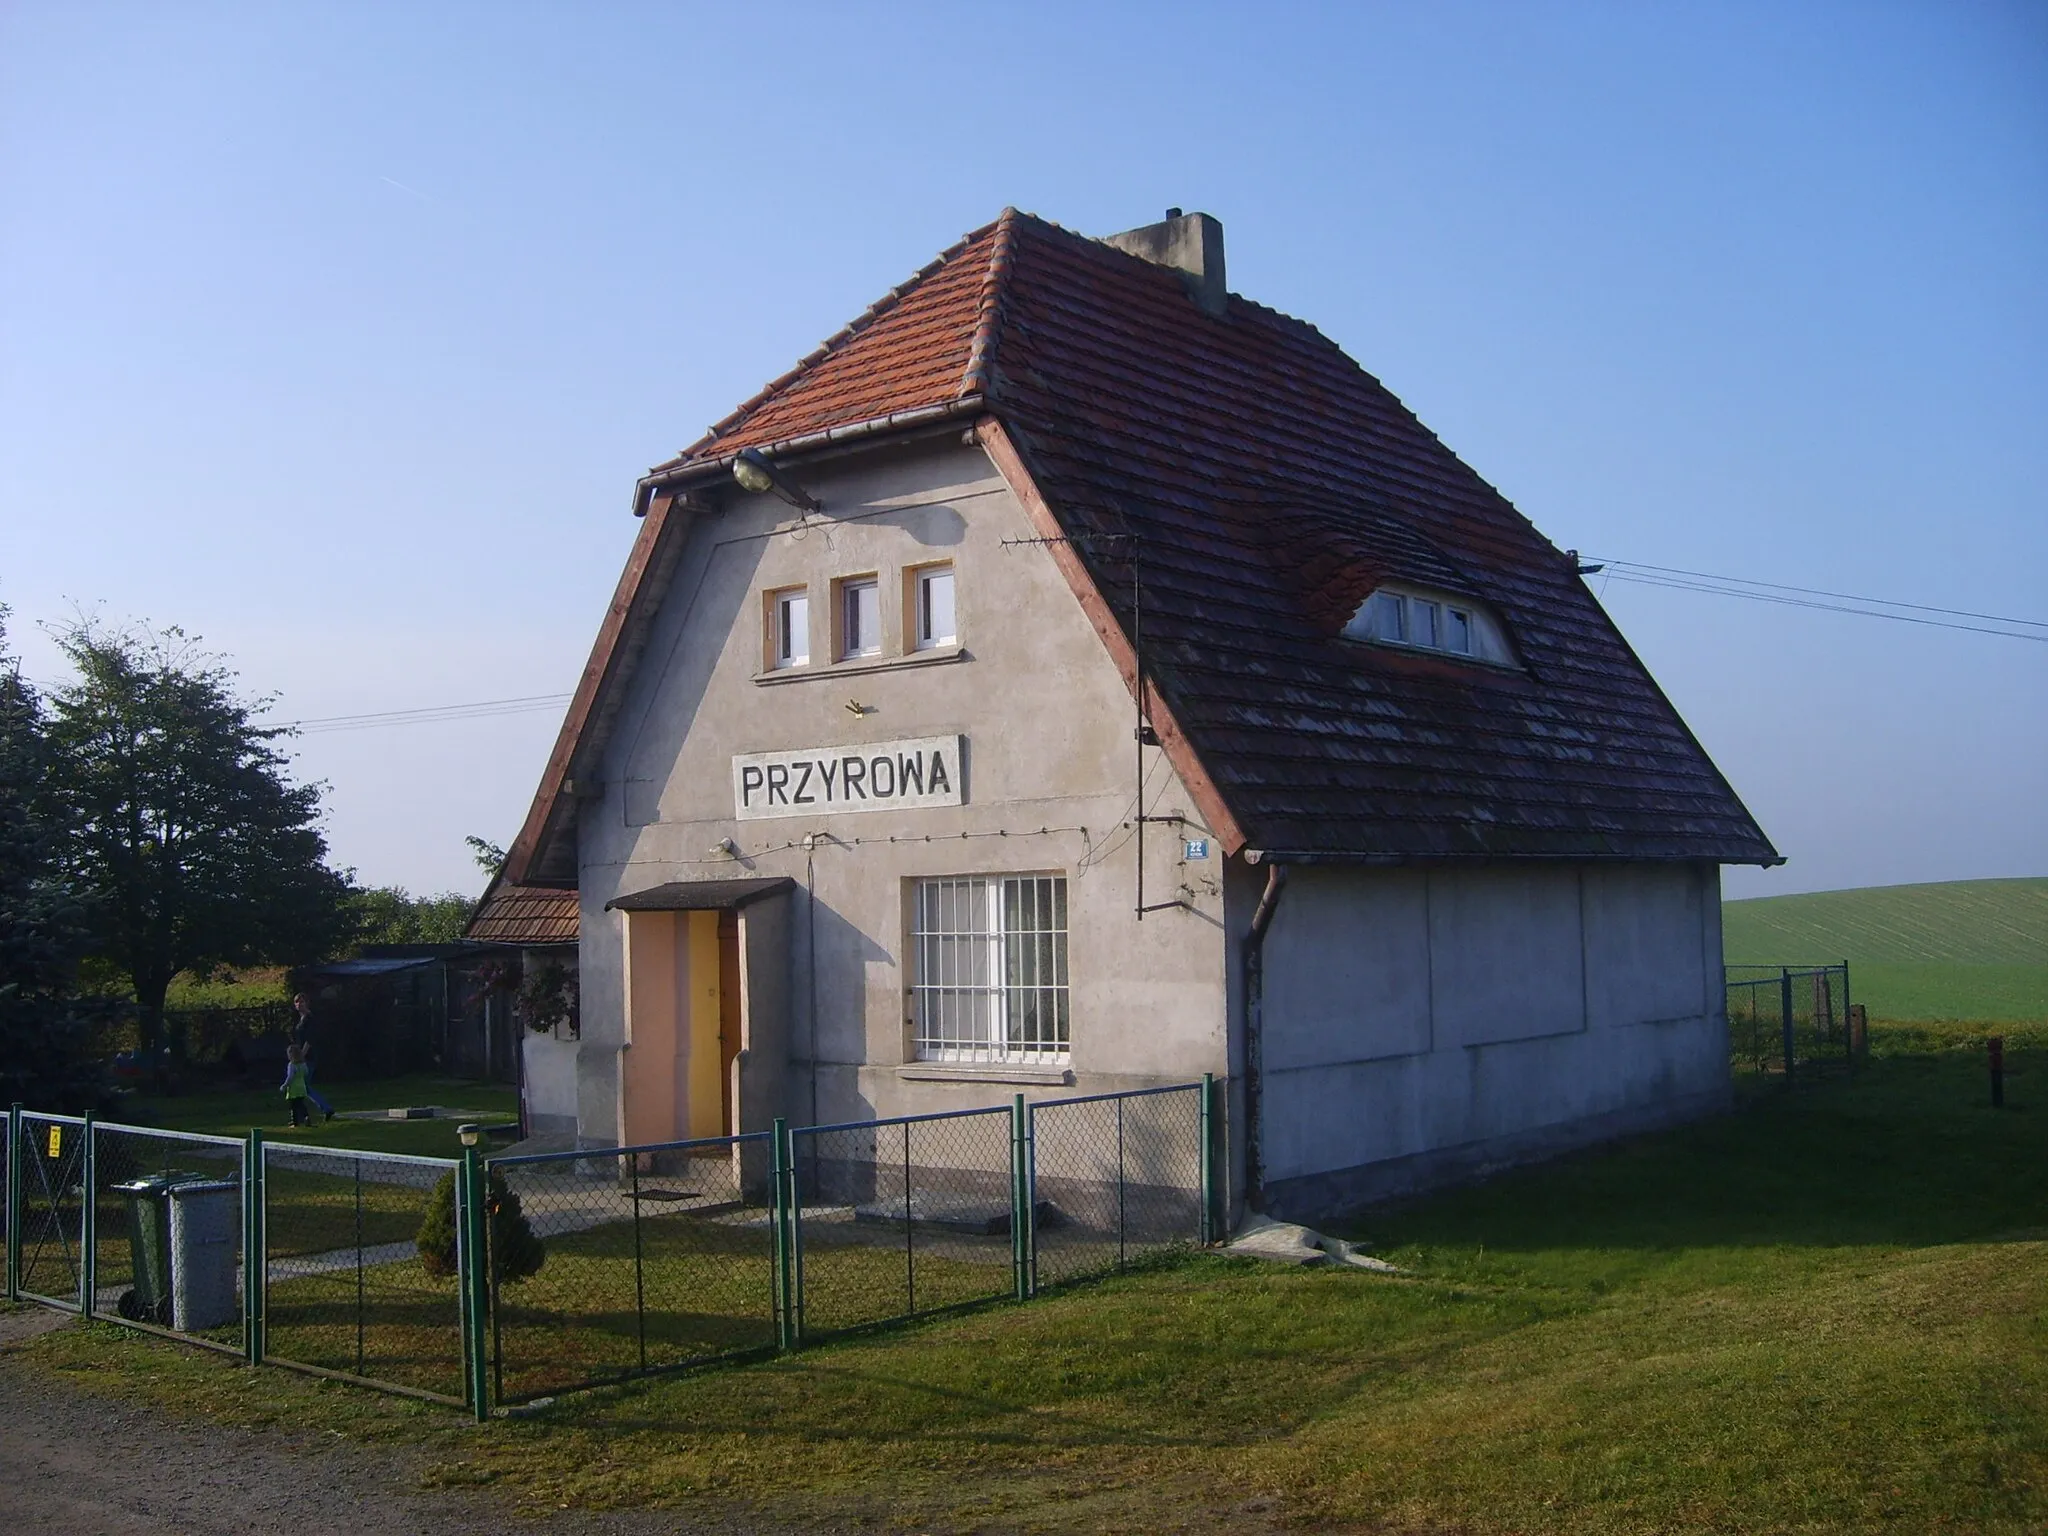 Photo showing: Train station in Przyrowa, Poland, on railway line Tuchola - Koronowo.